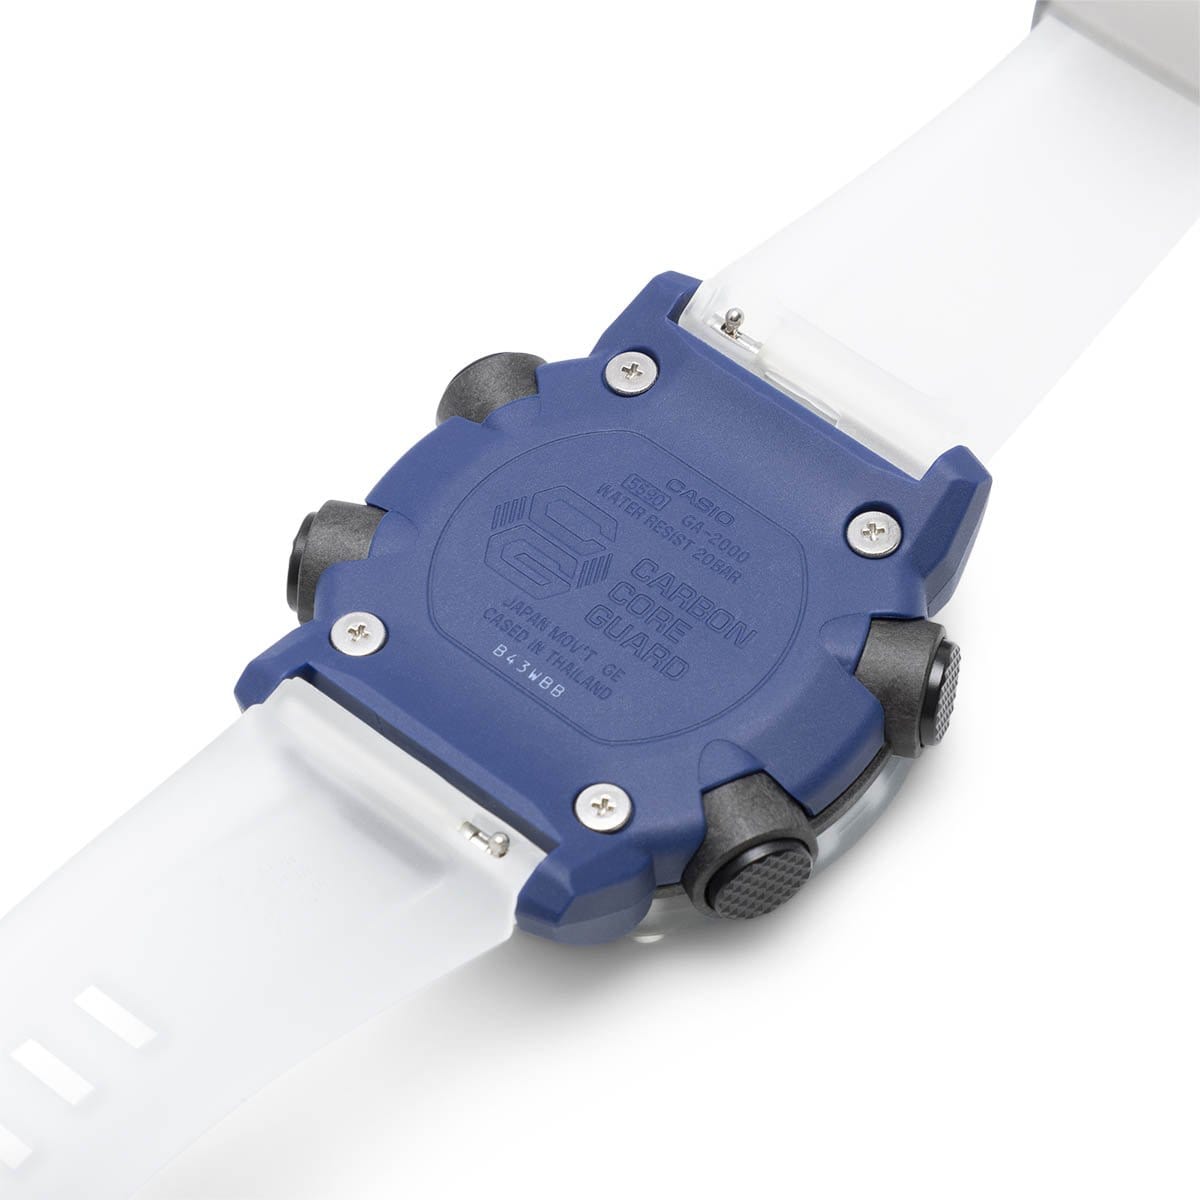 G-Shock Watches WHITE/BLUE / O/S GA2000HC-7A